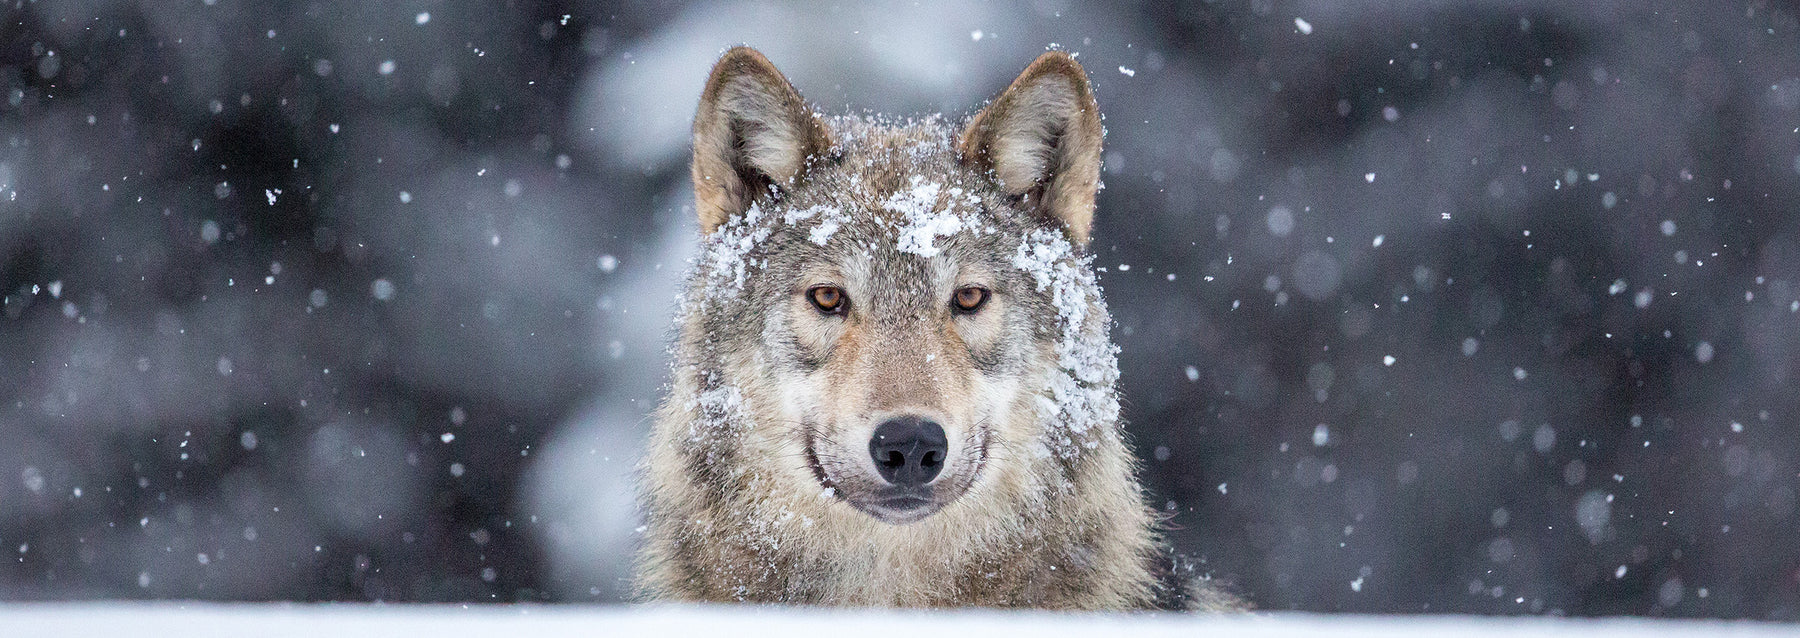 Wild wolf photography - John E. Marriott